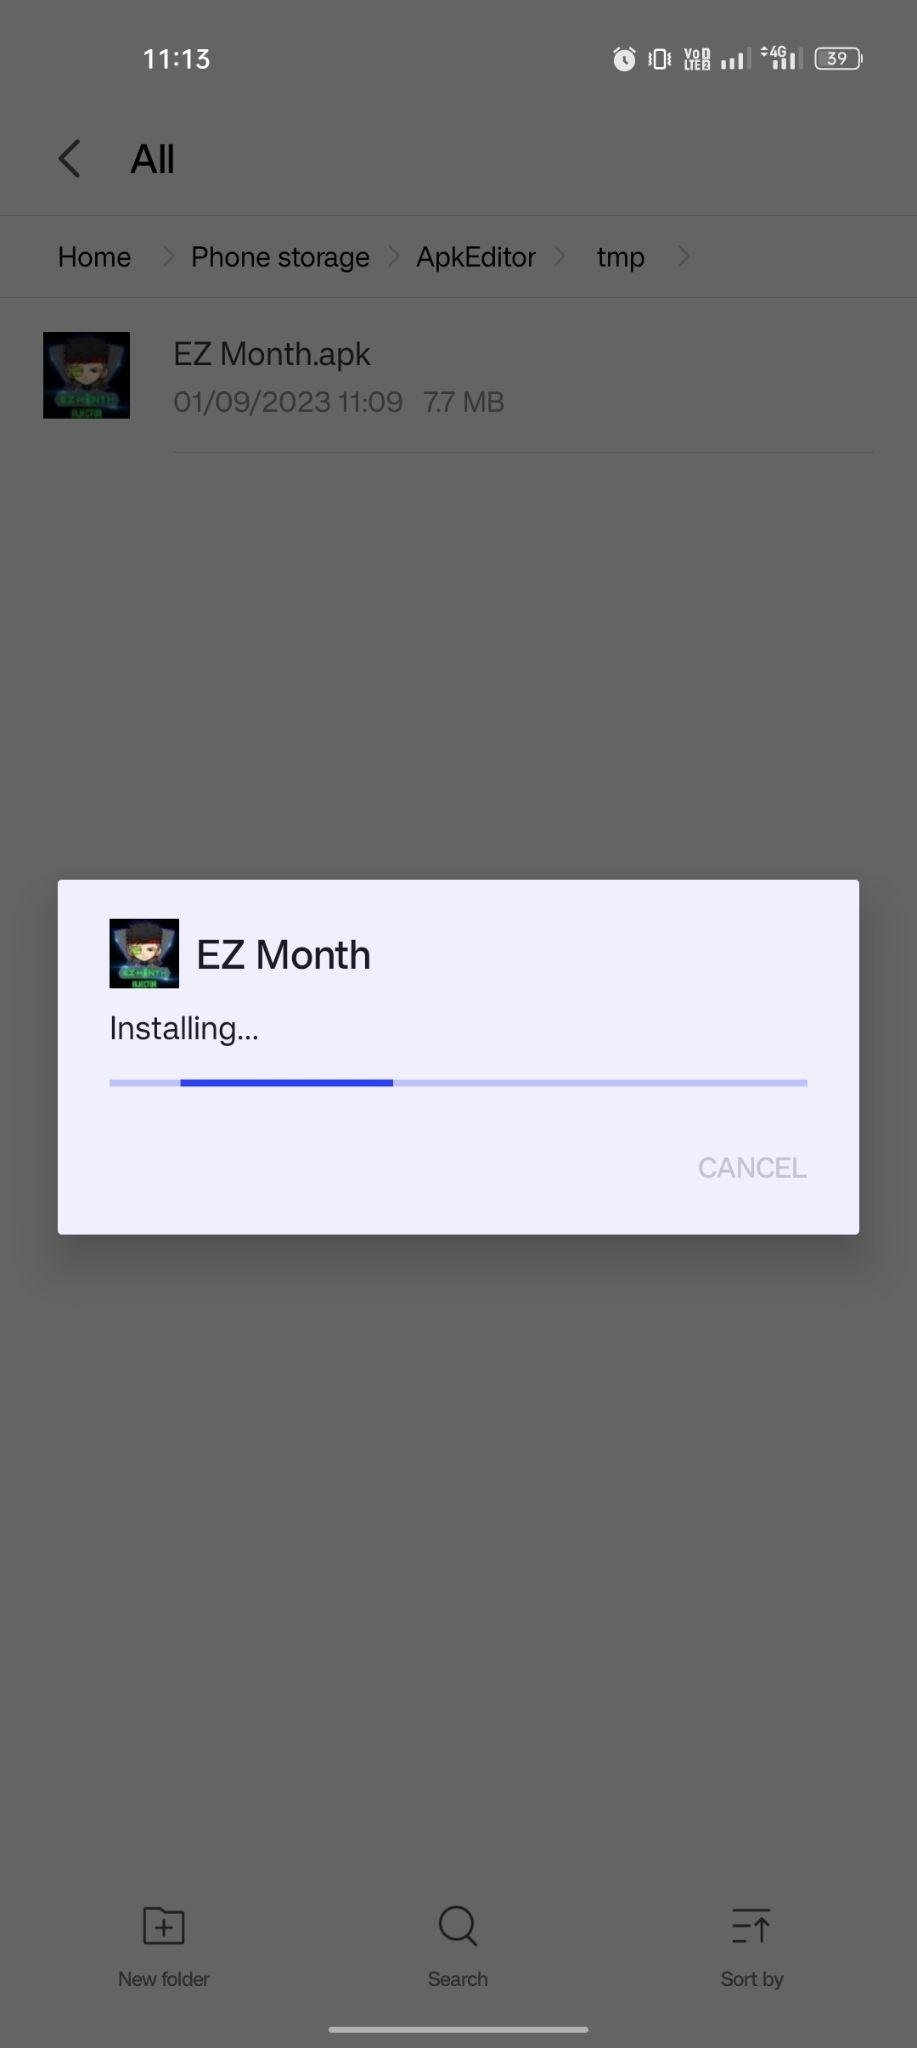 EZ Month apk installing